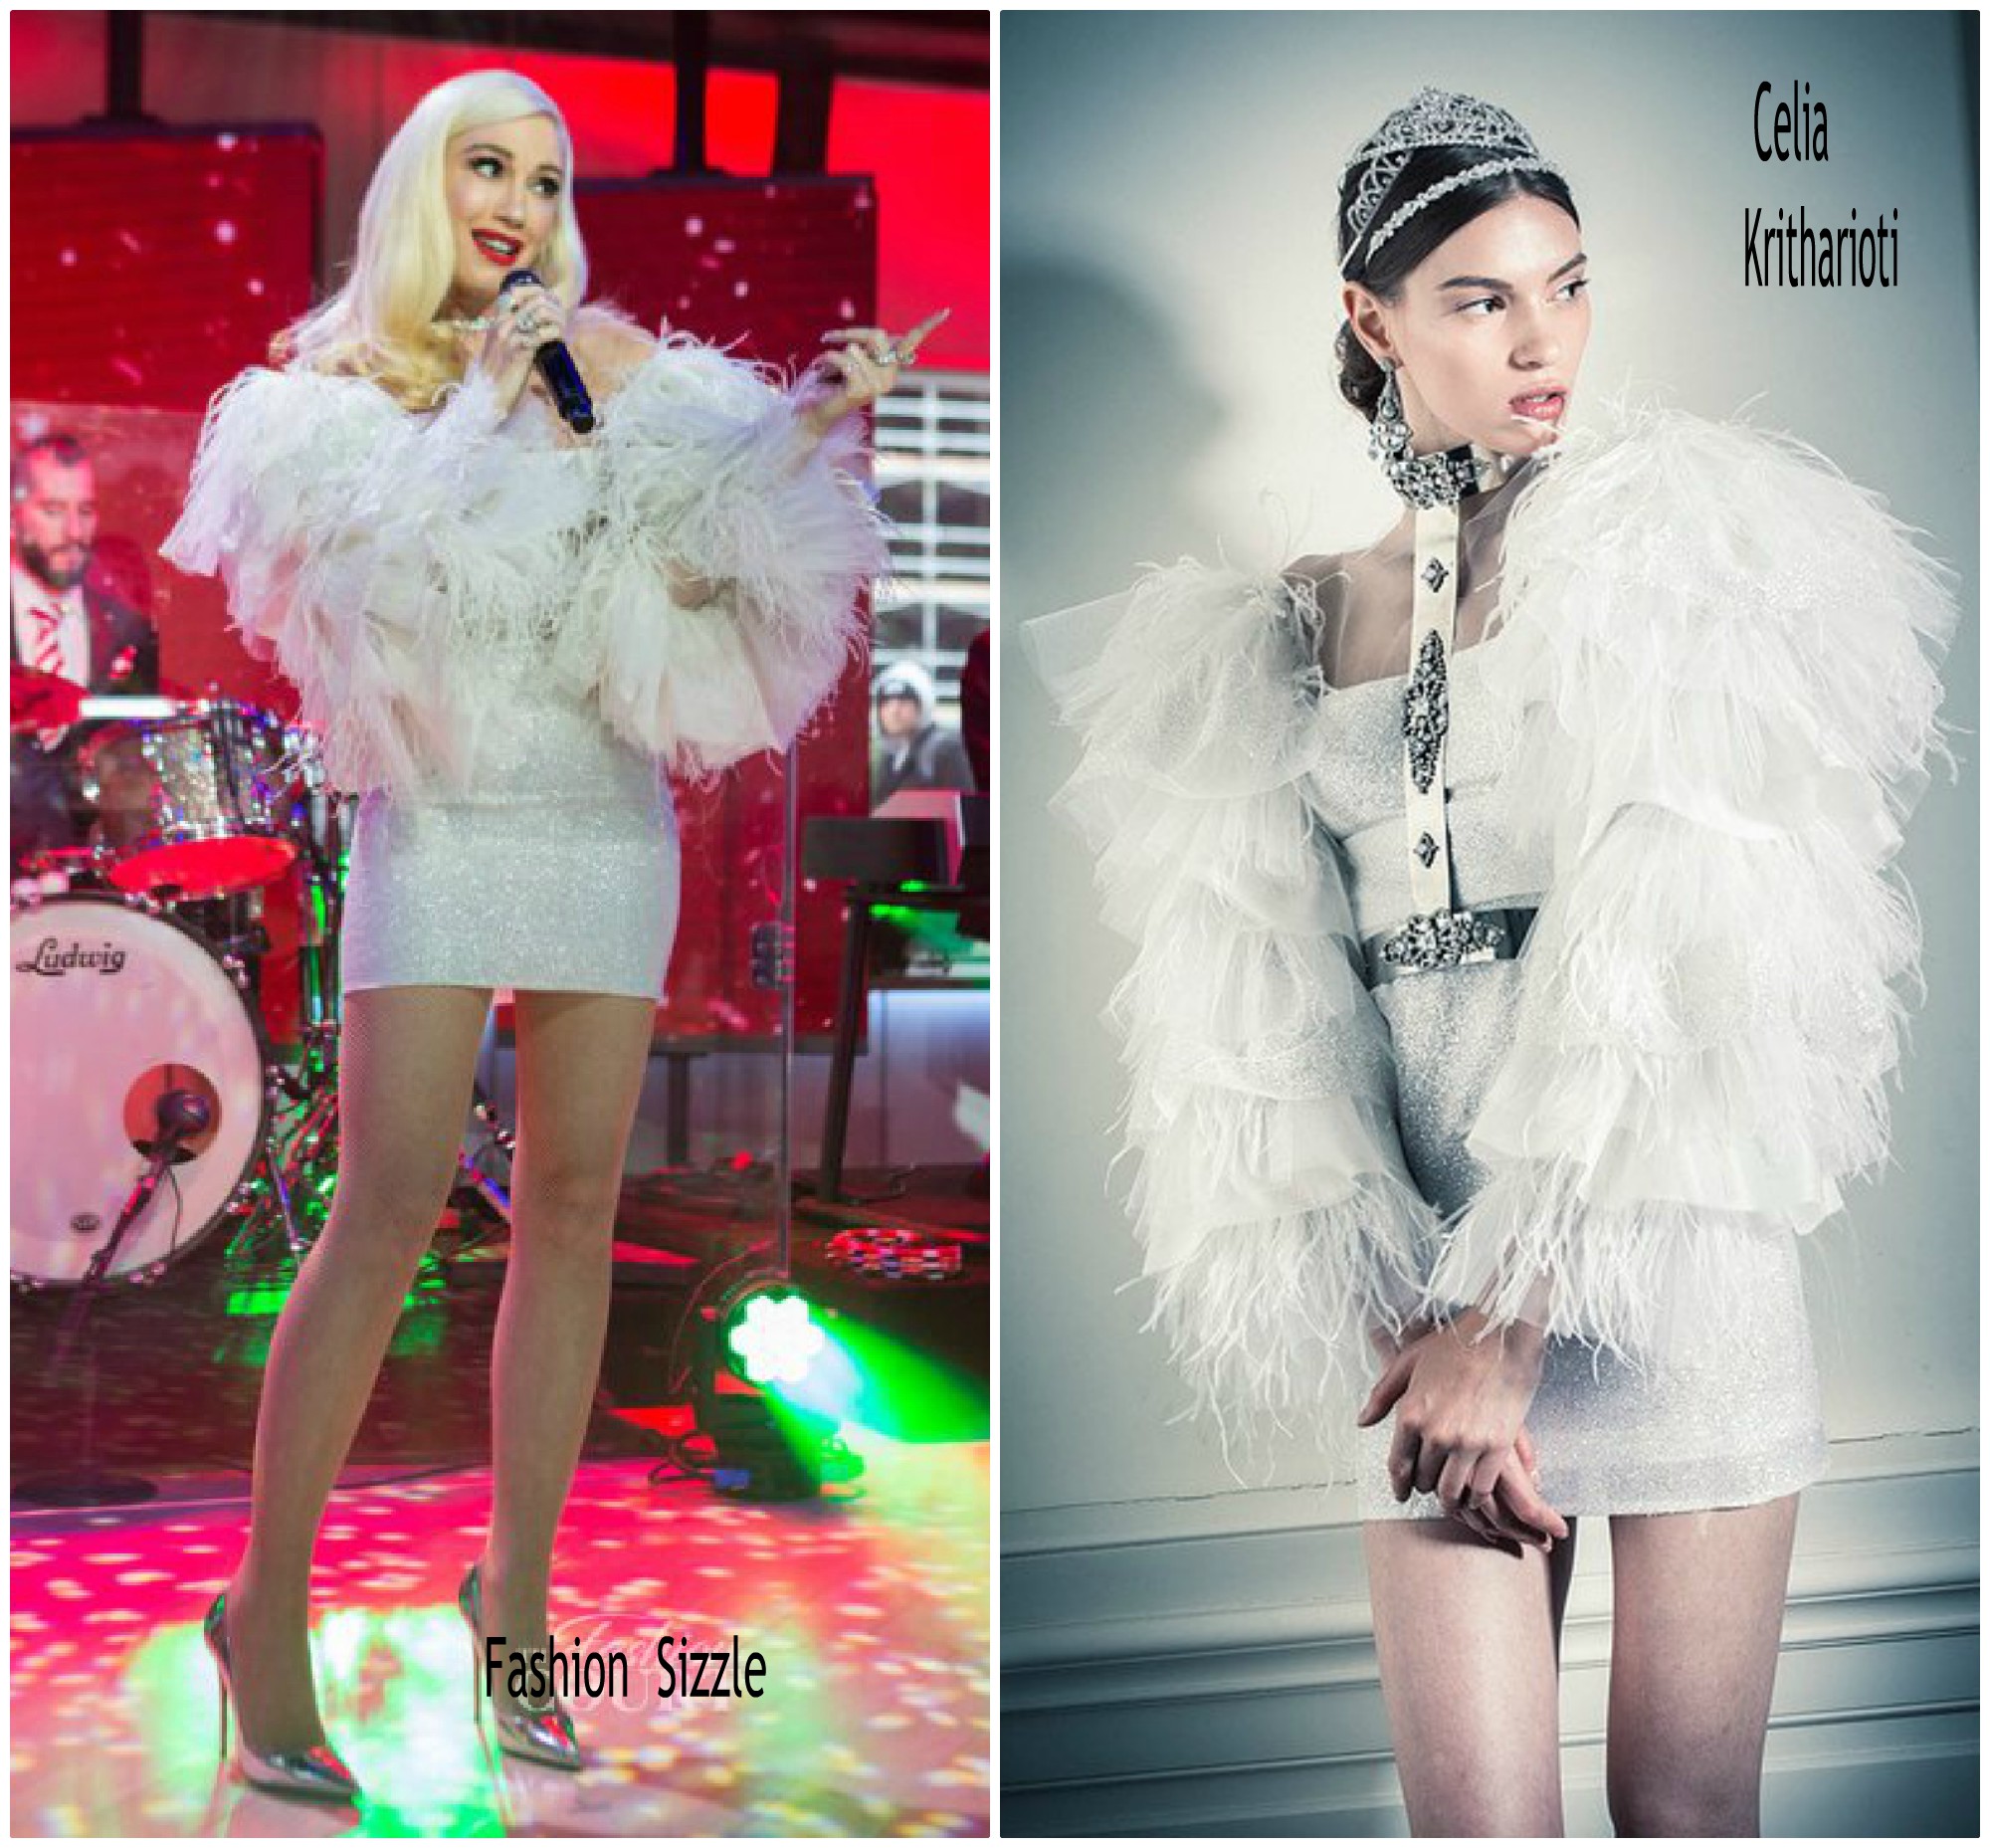 Gwen Stefani In Celia Kritharioti - Promotes Her Album "You Make It Feel Like Christmas ...